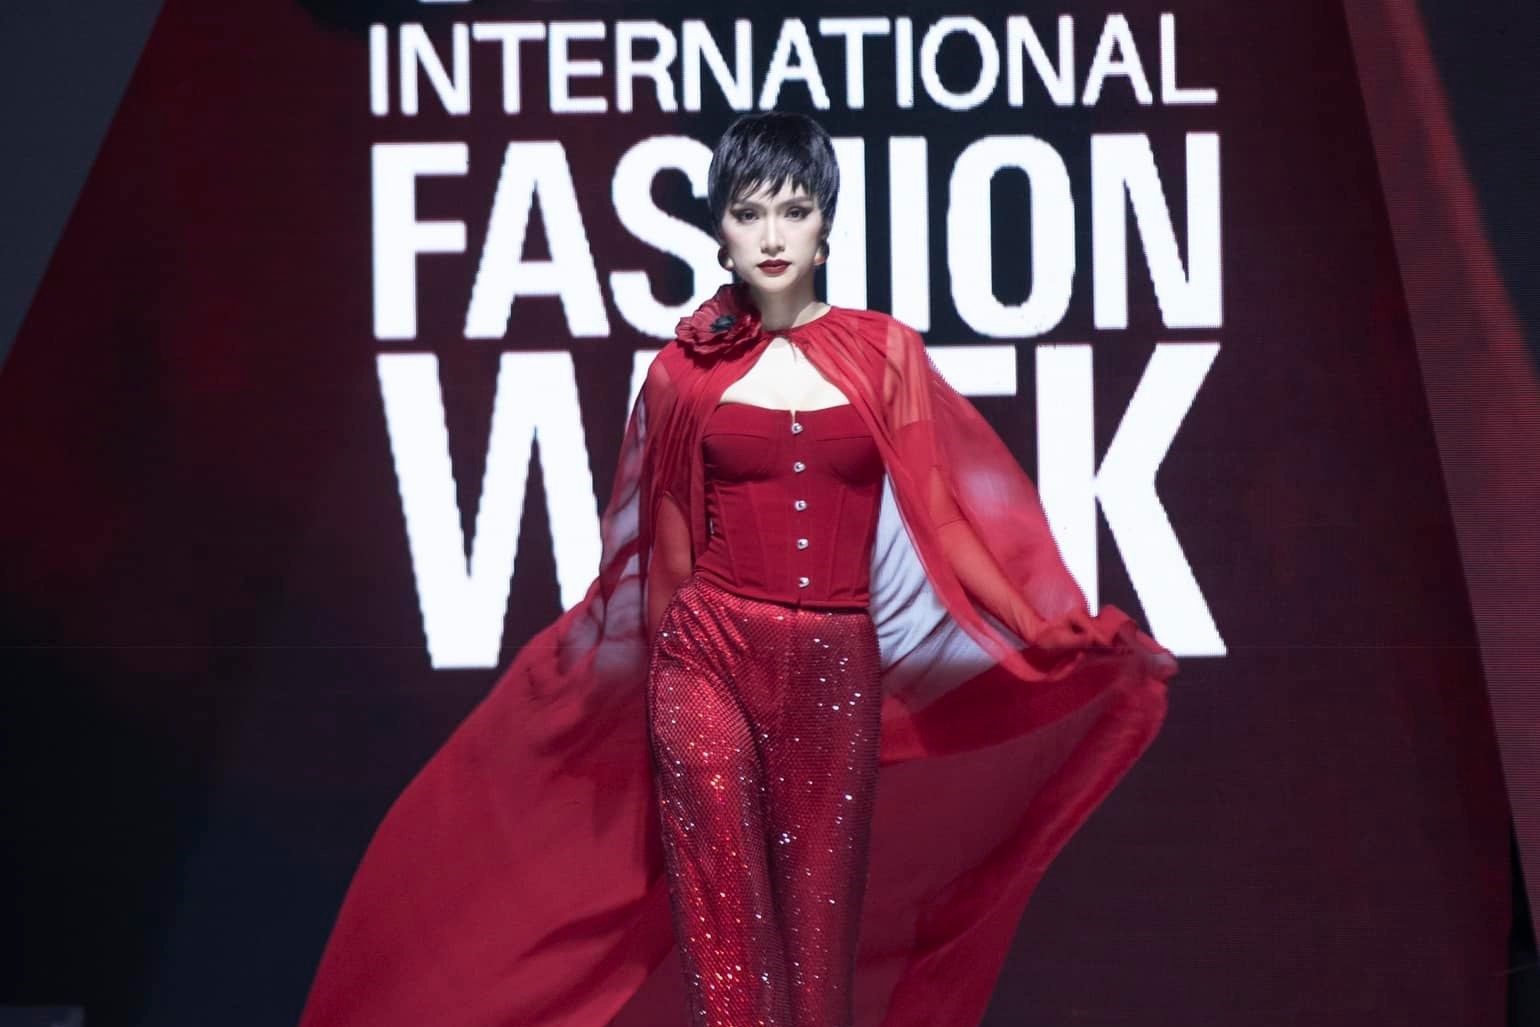 Miss International Queen 2018 plays a vedette role at Vietnam International Fashion Week